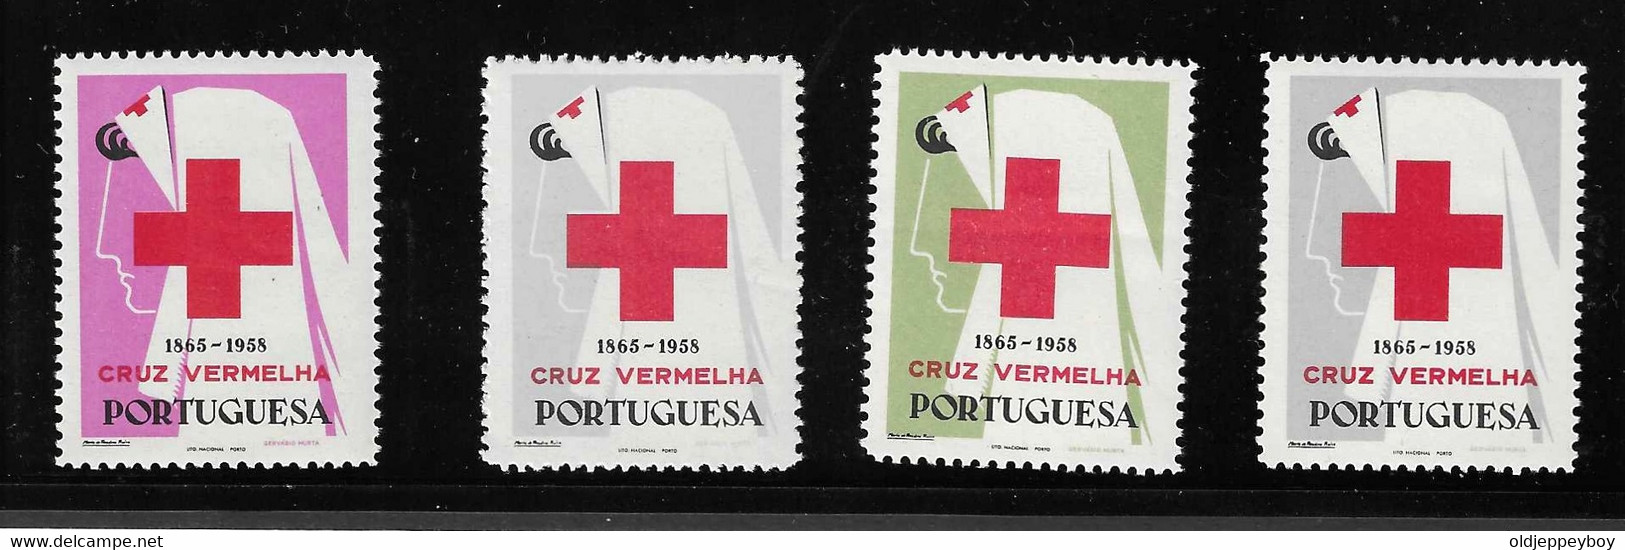 1958 PORTUGAL VIGNETTE RED CROSS CROIX ROUGE TIPO "PERFIL DE ENFERMEIRA" CRUZ VERMELHA PORTUGUESA MINT - Red Cross